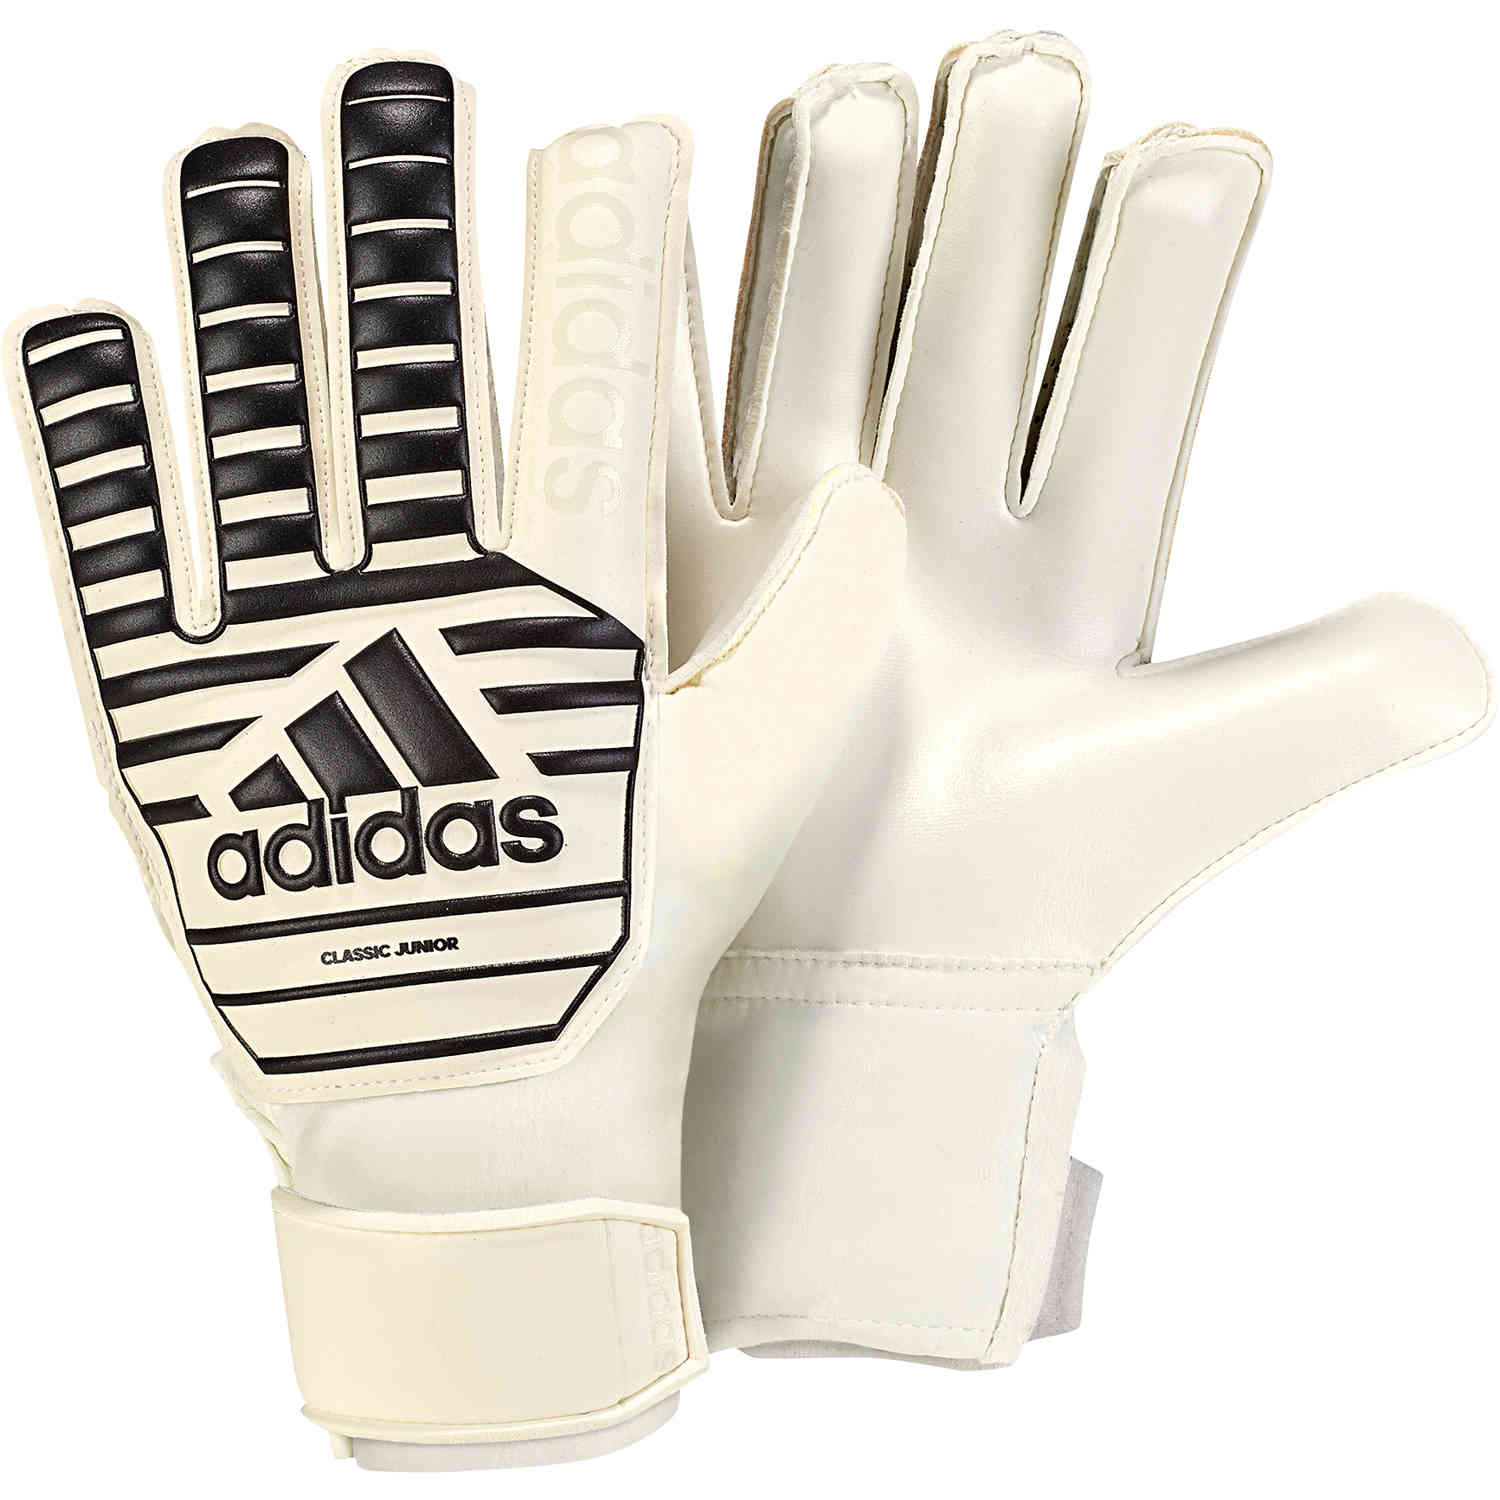 adidas youth goalie gloves